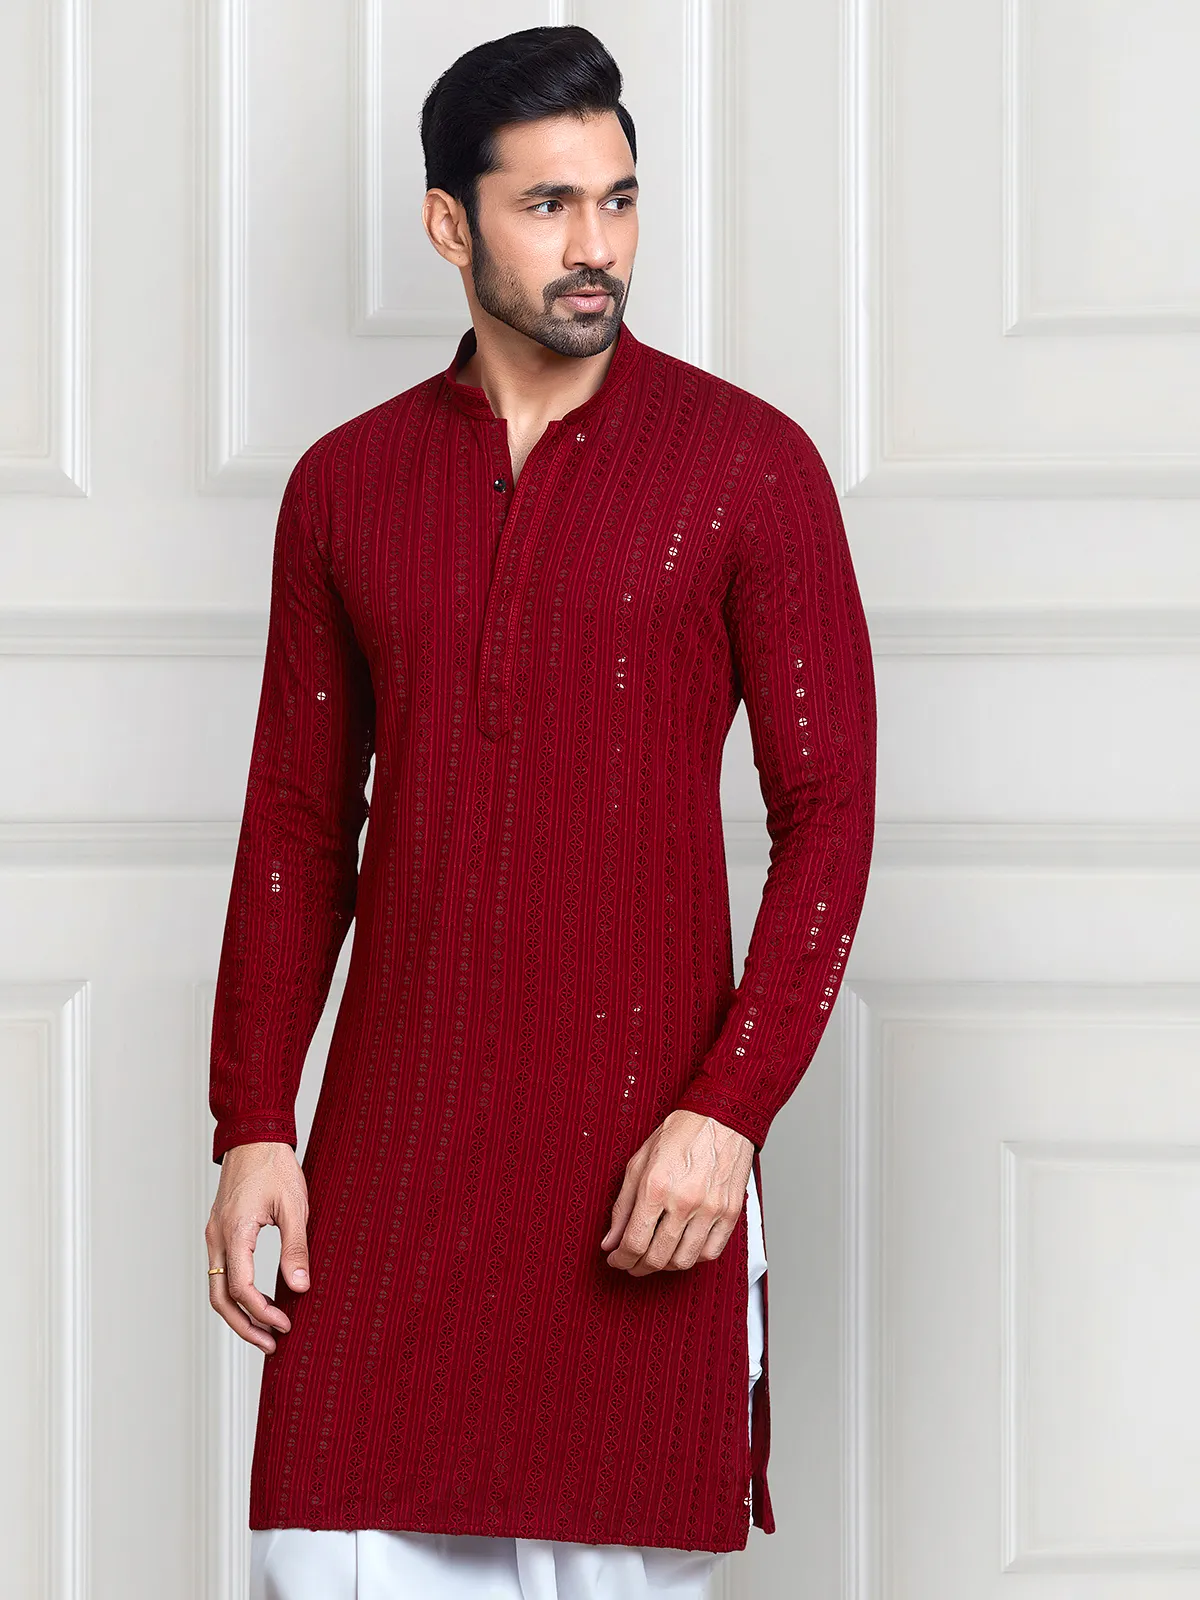 Red rayon cotton kurta with peshawari dhoti